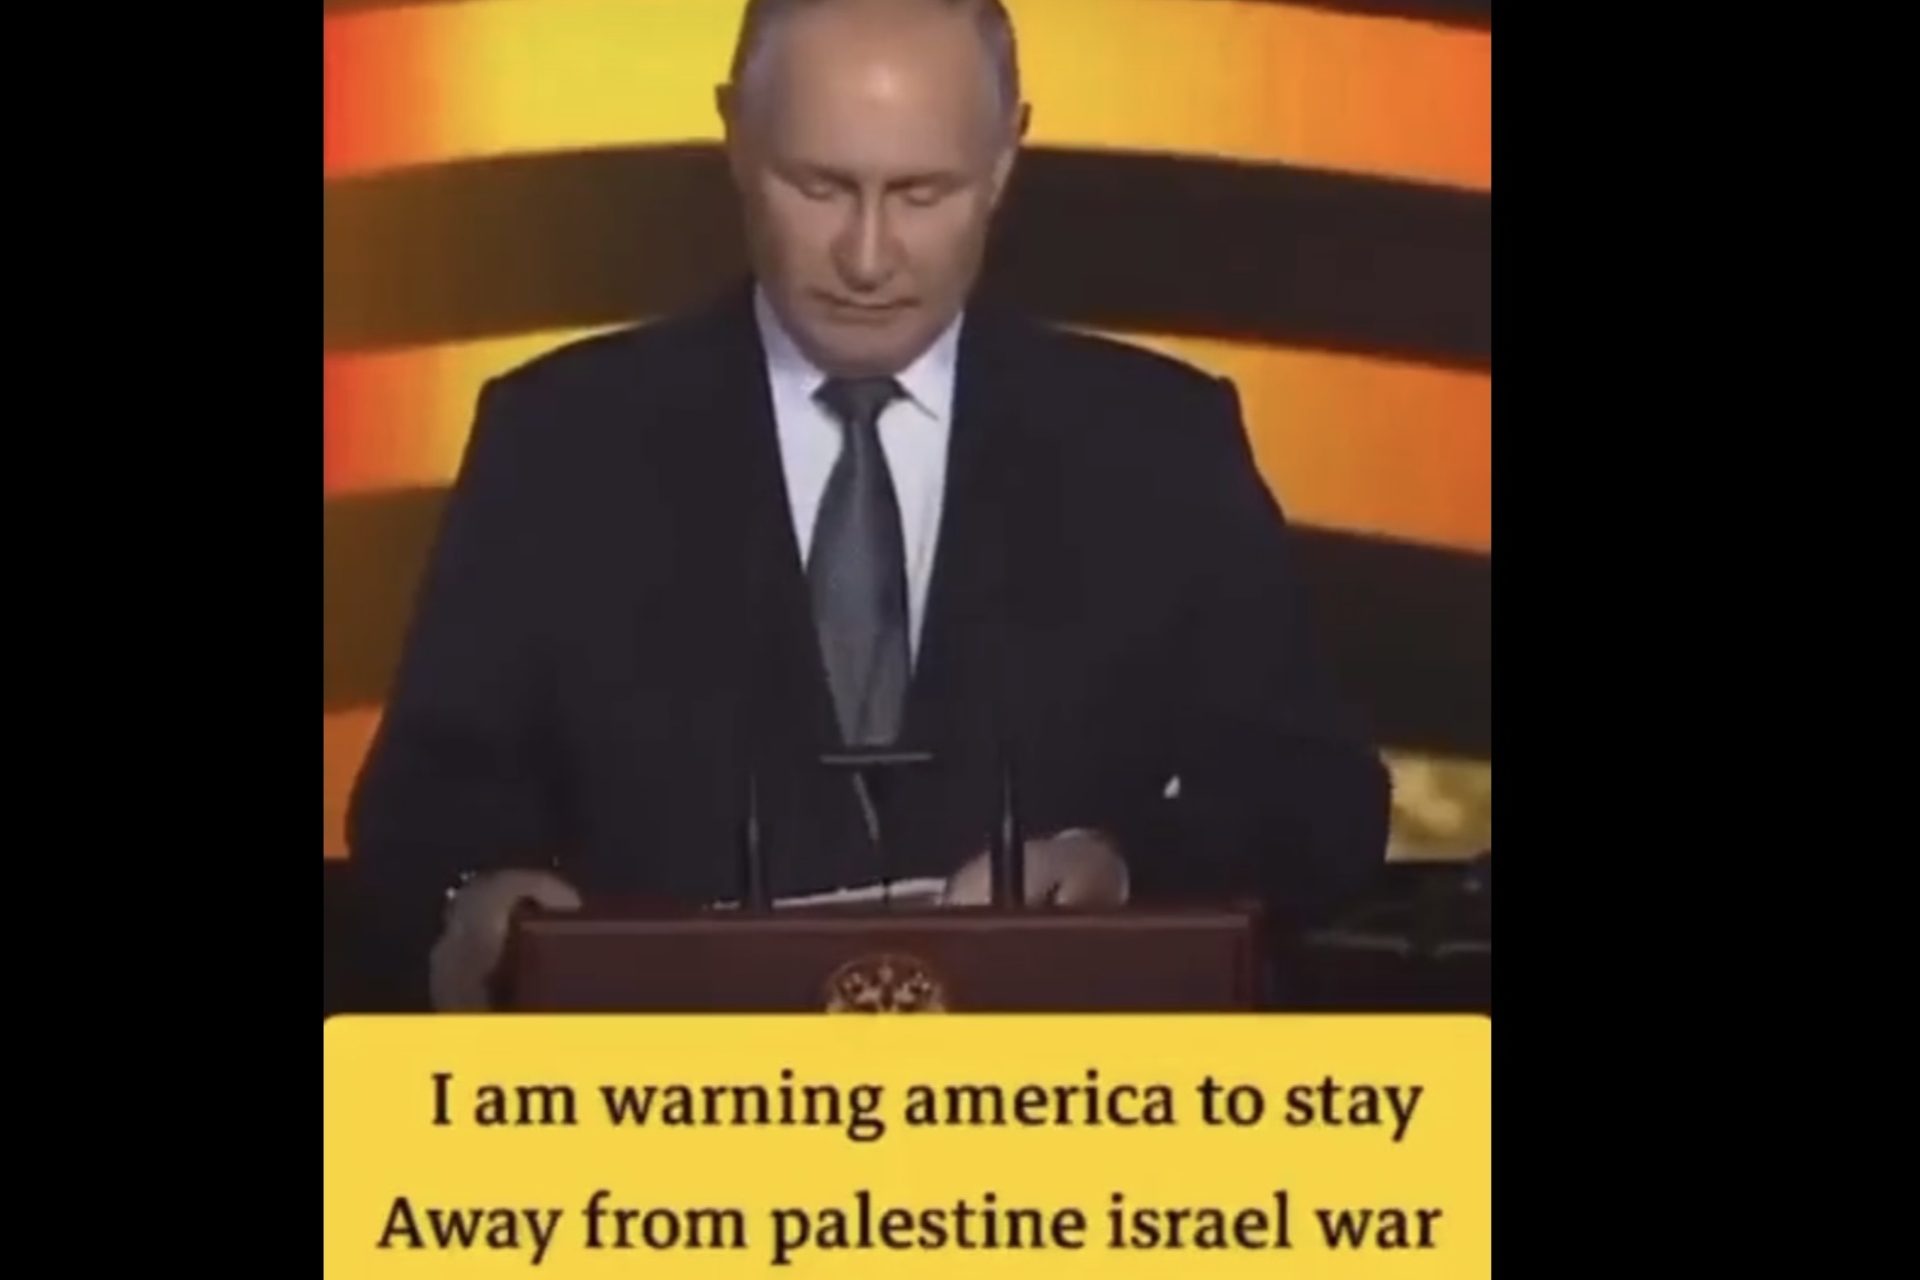 Videos of Putin with fake English captions 